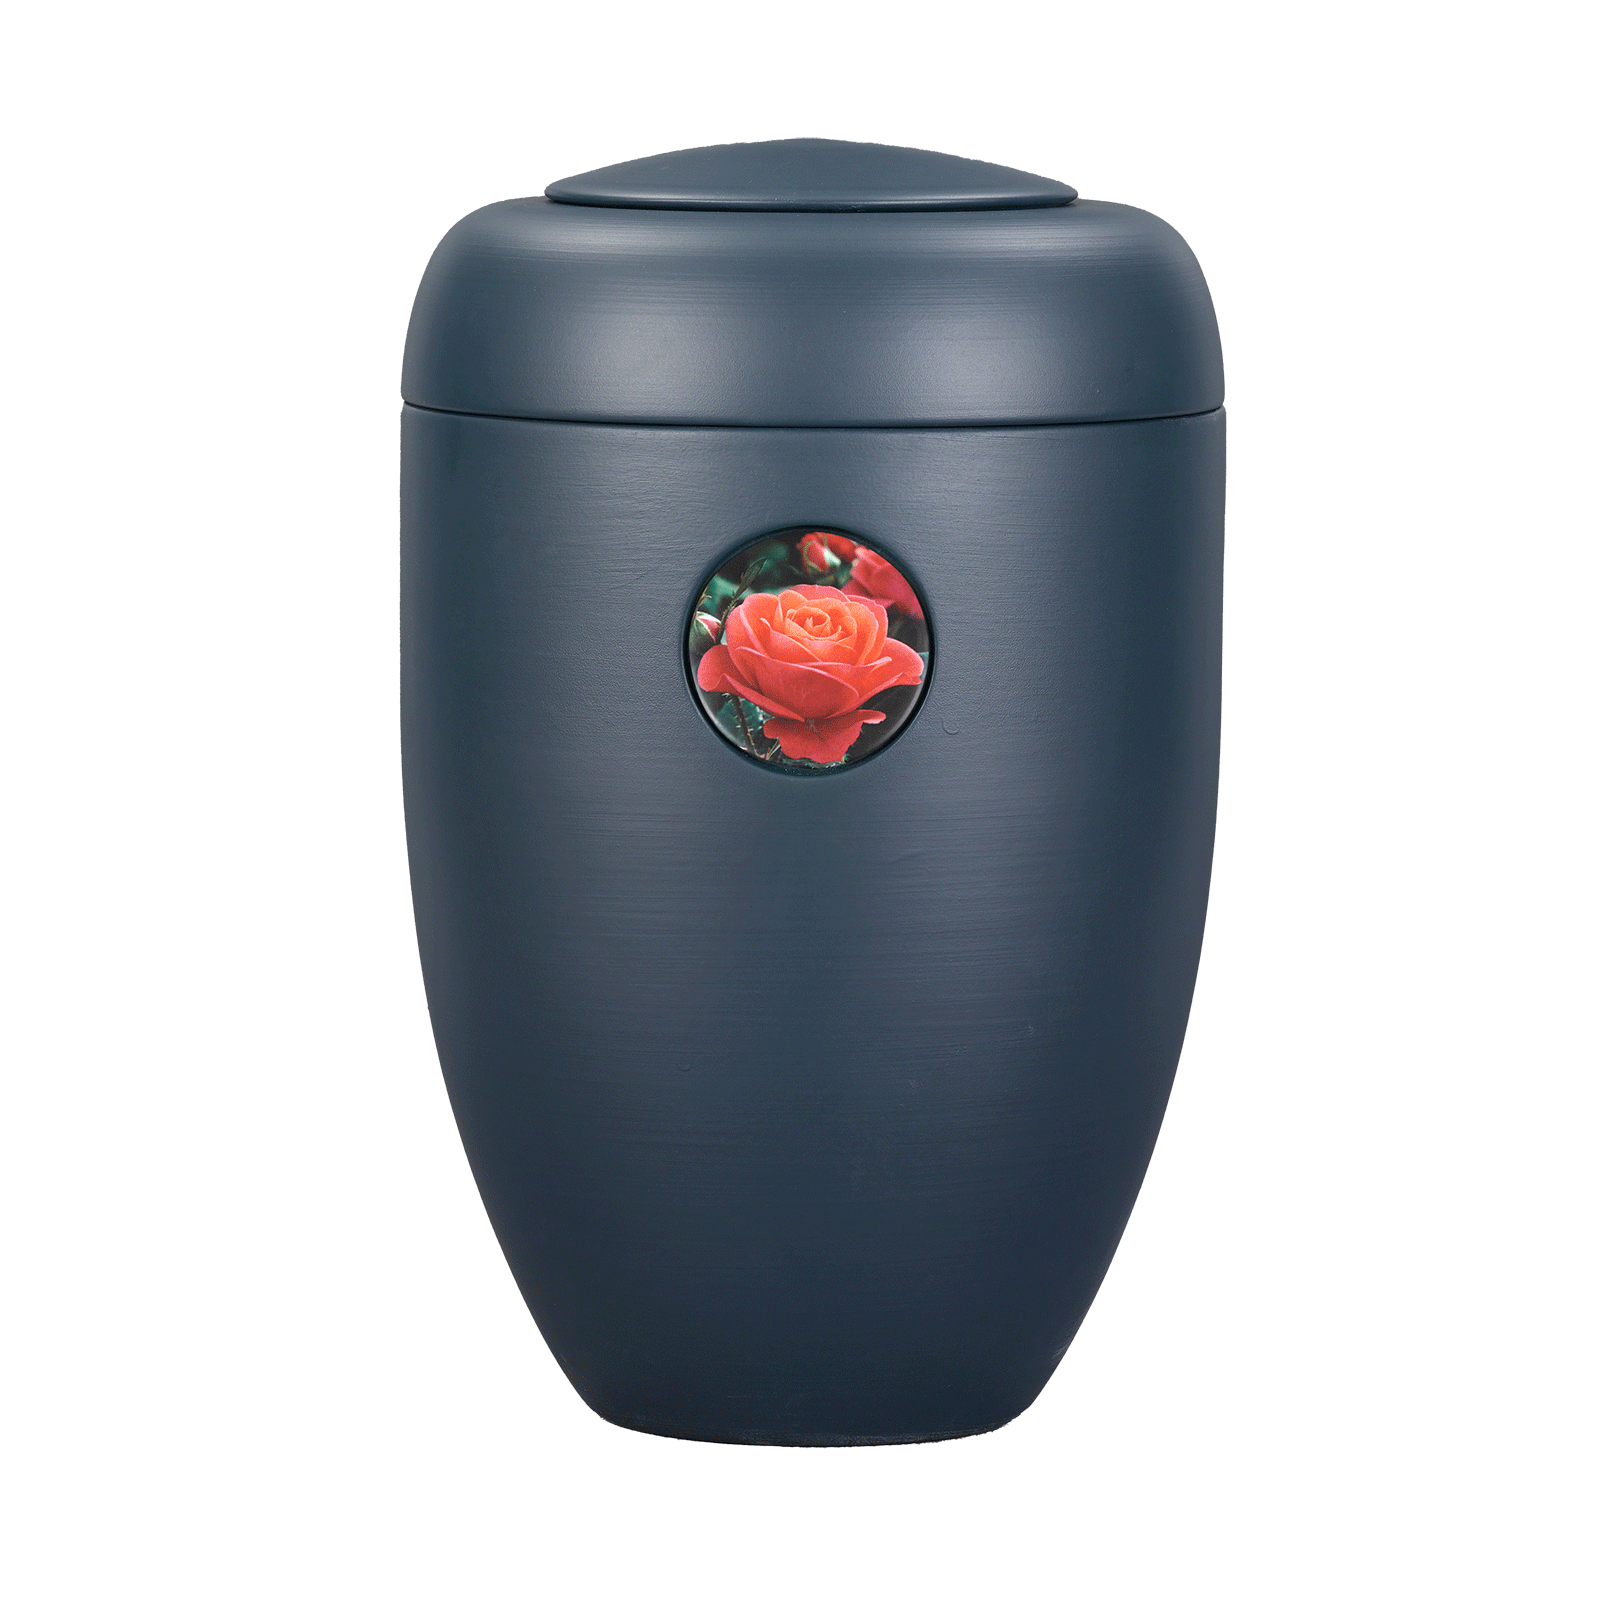 Petrolblaue Memori-Urne mit lachsfarbener Rose Button